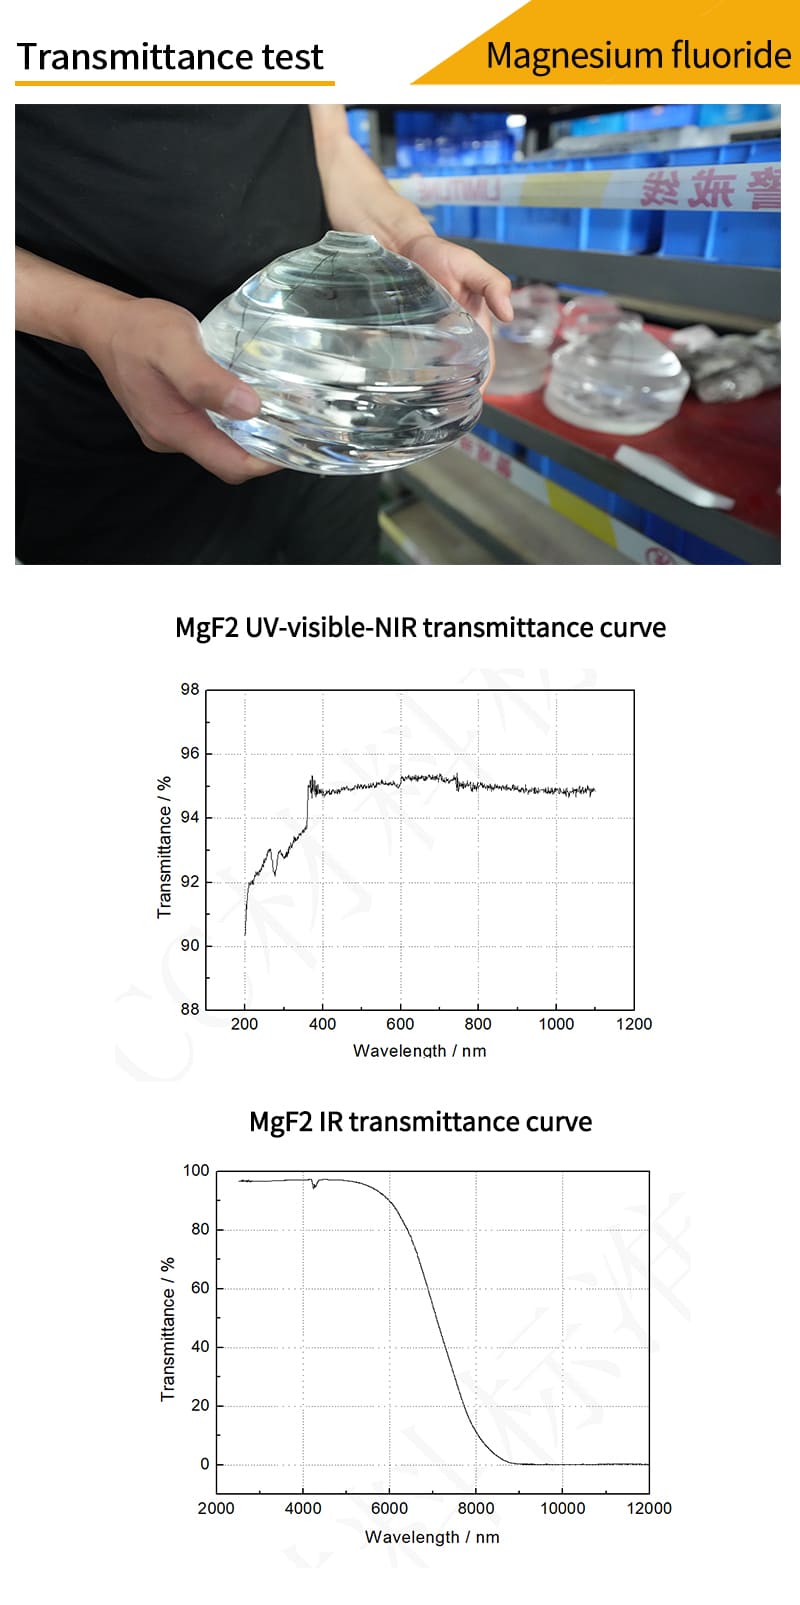 Magnesium Fluoride plano-concave lenses transmittance test